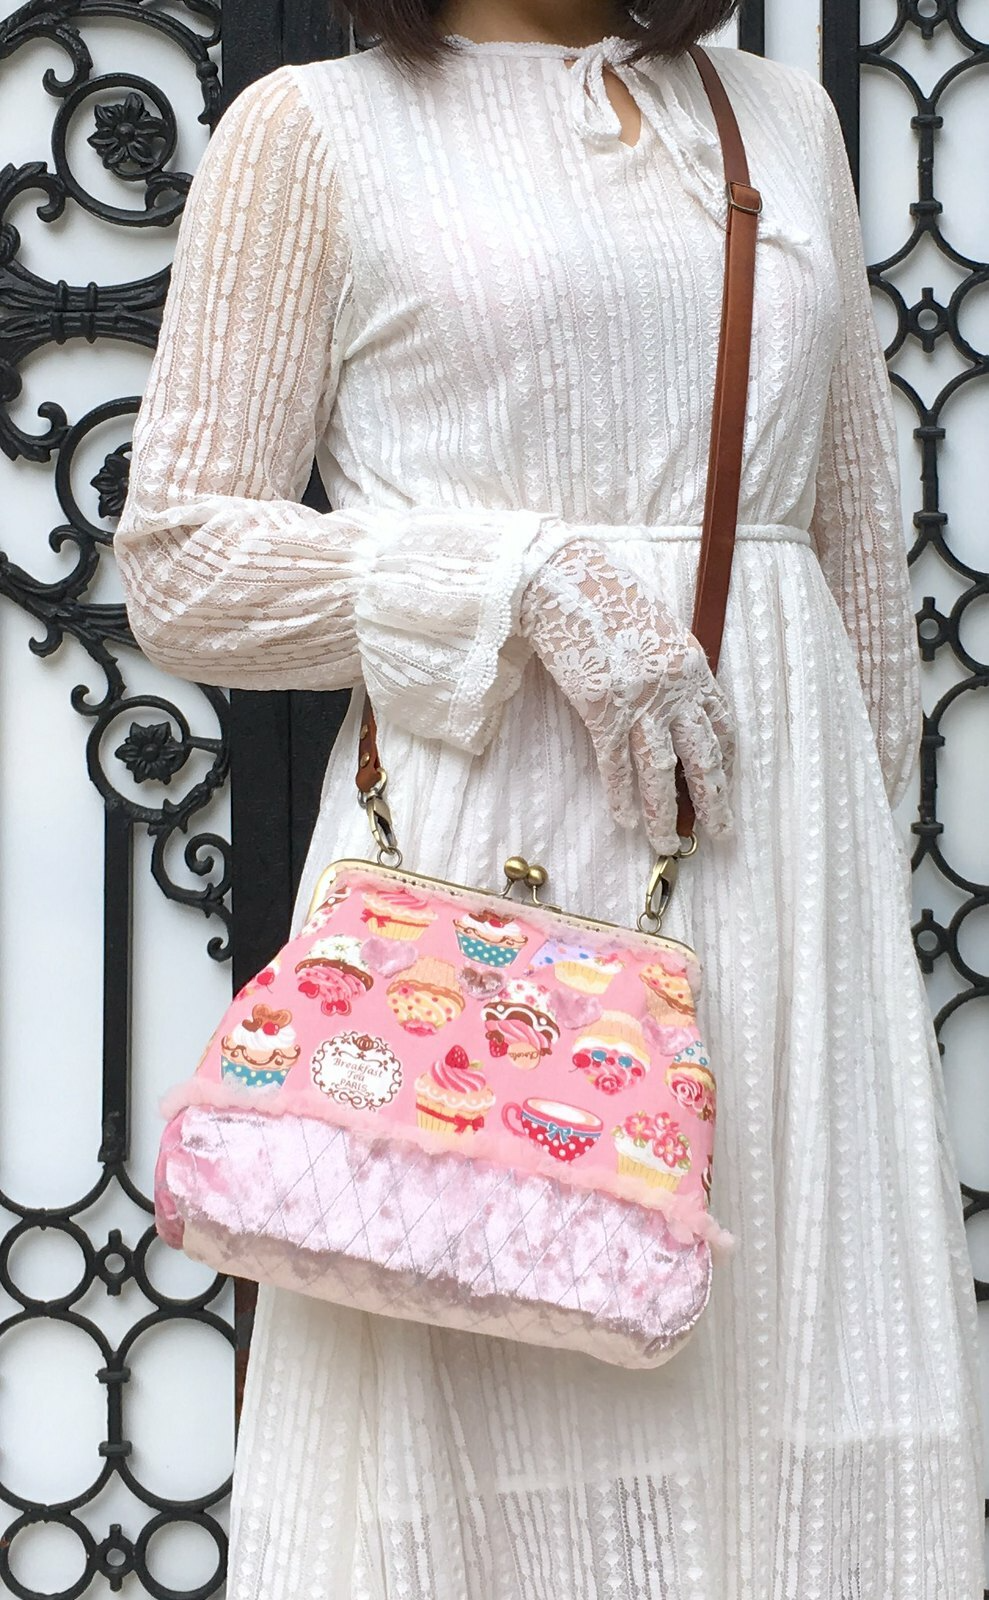 風后妃設計口金包粉色蛋糕吻鎖包包pink bag fashion kiss lock frame bag